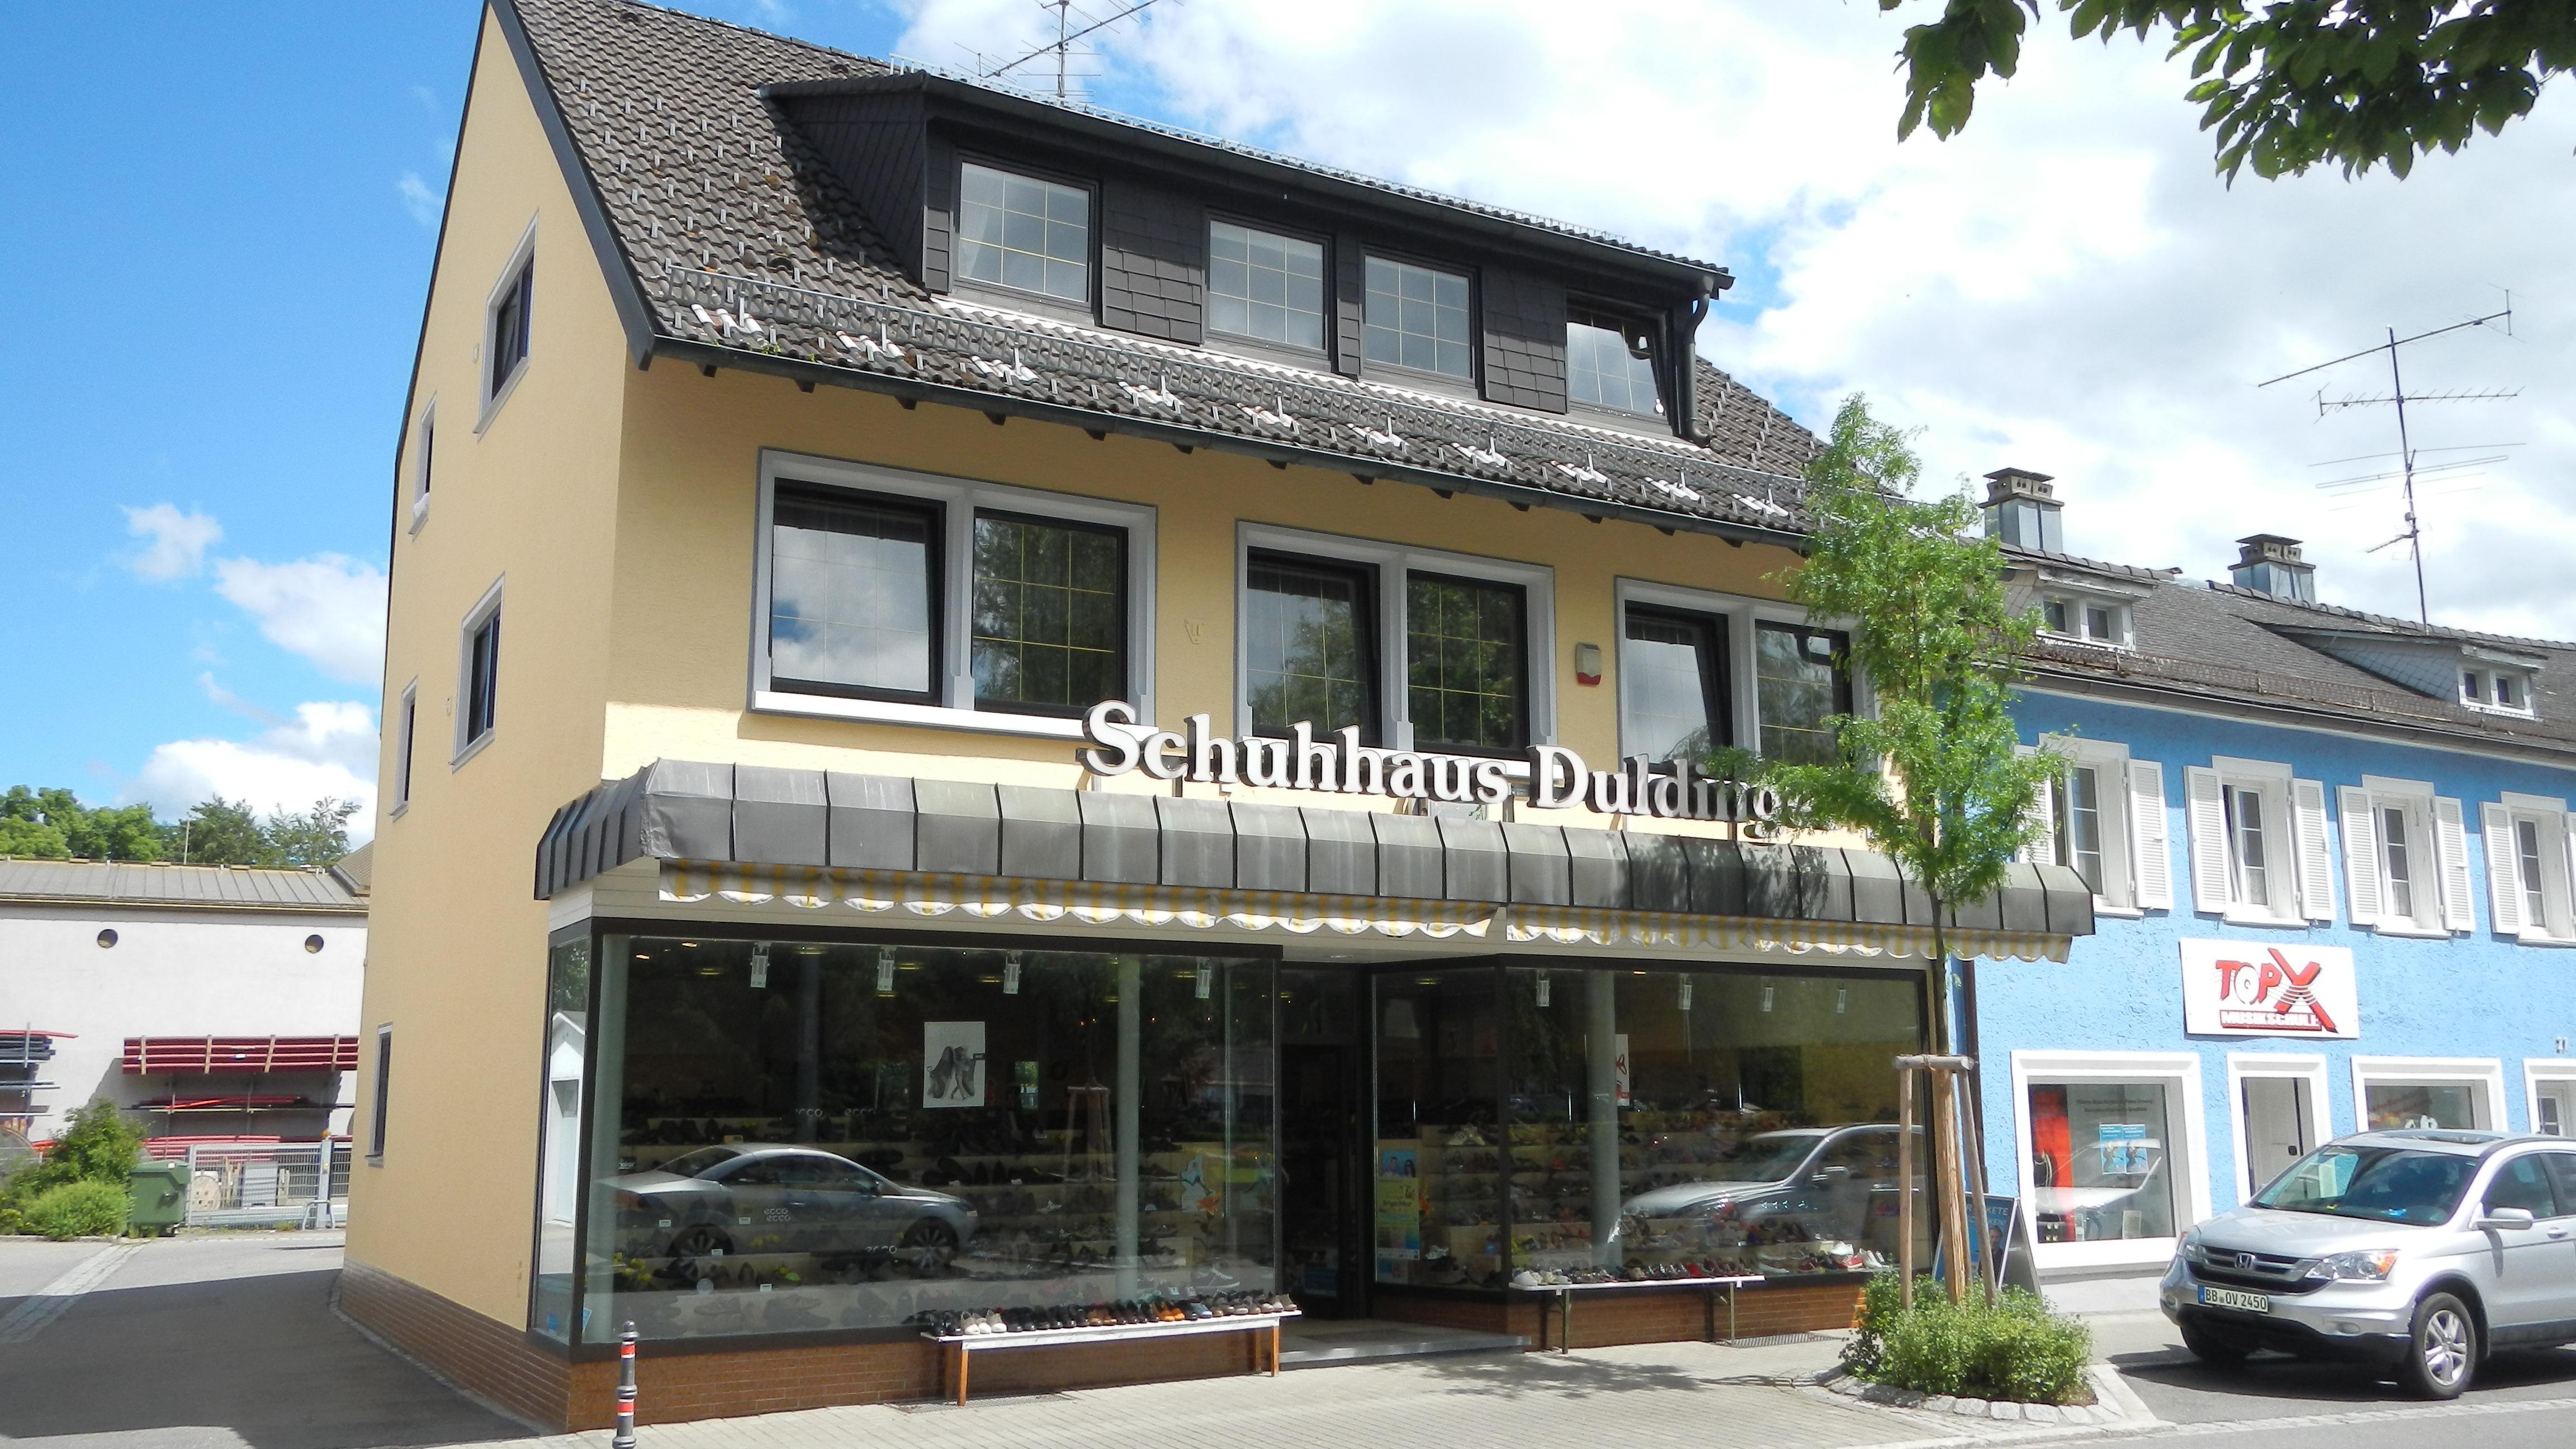 Duldinger Schuhhaus